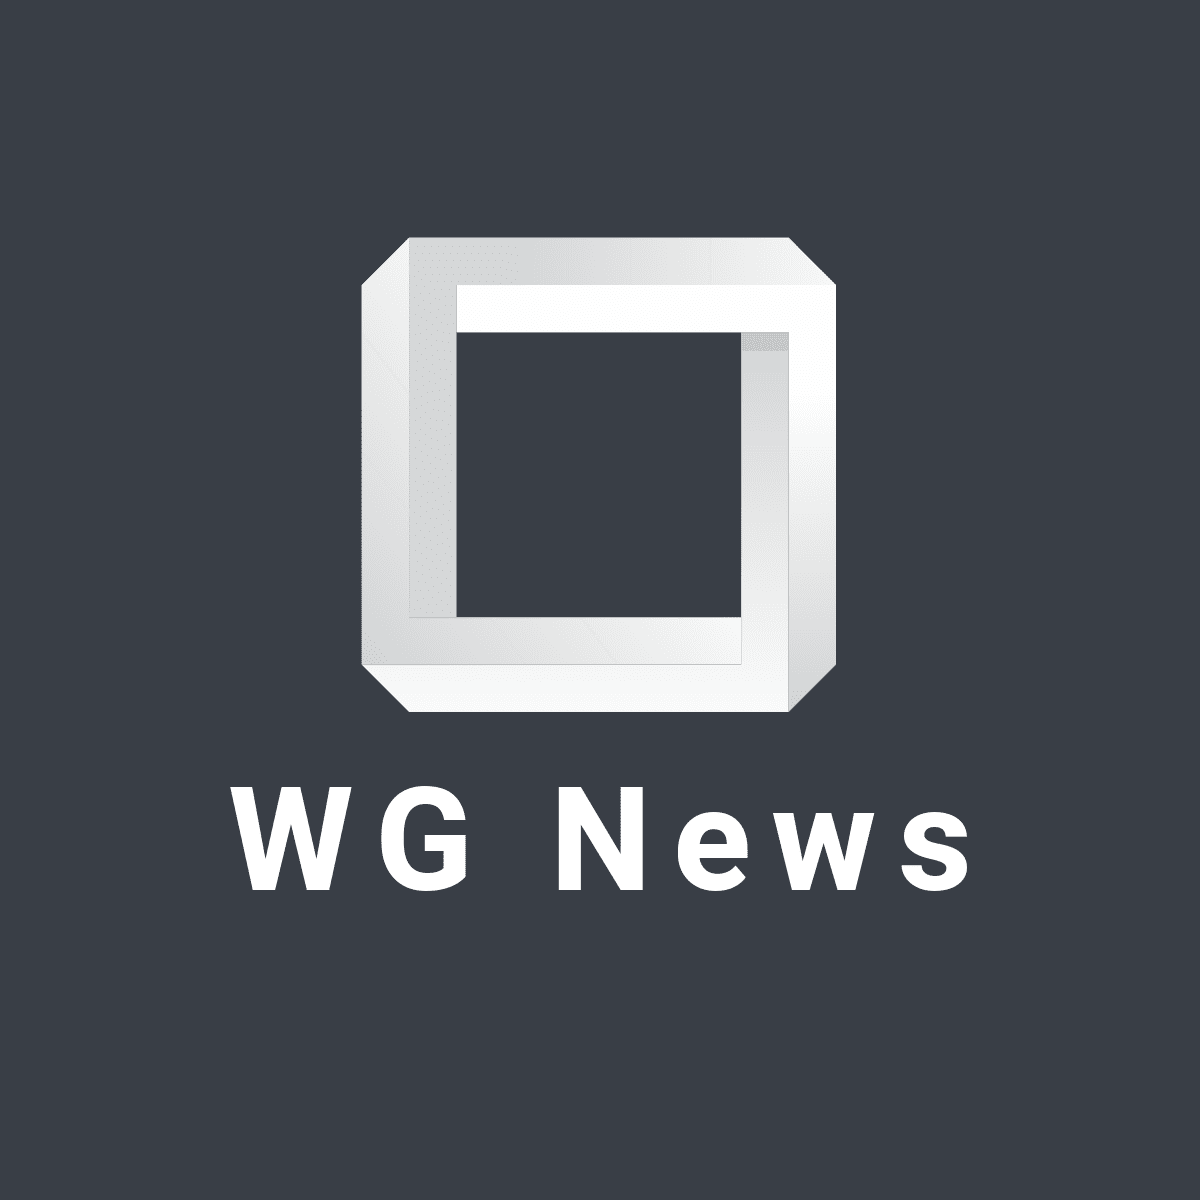 WG News